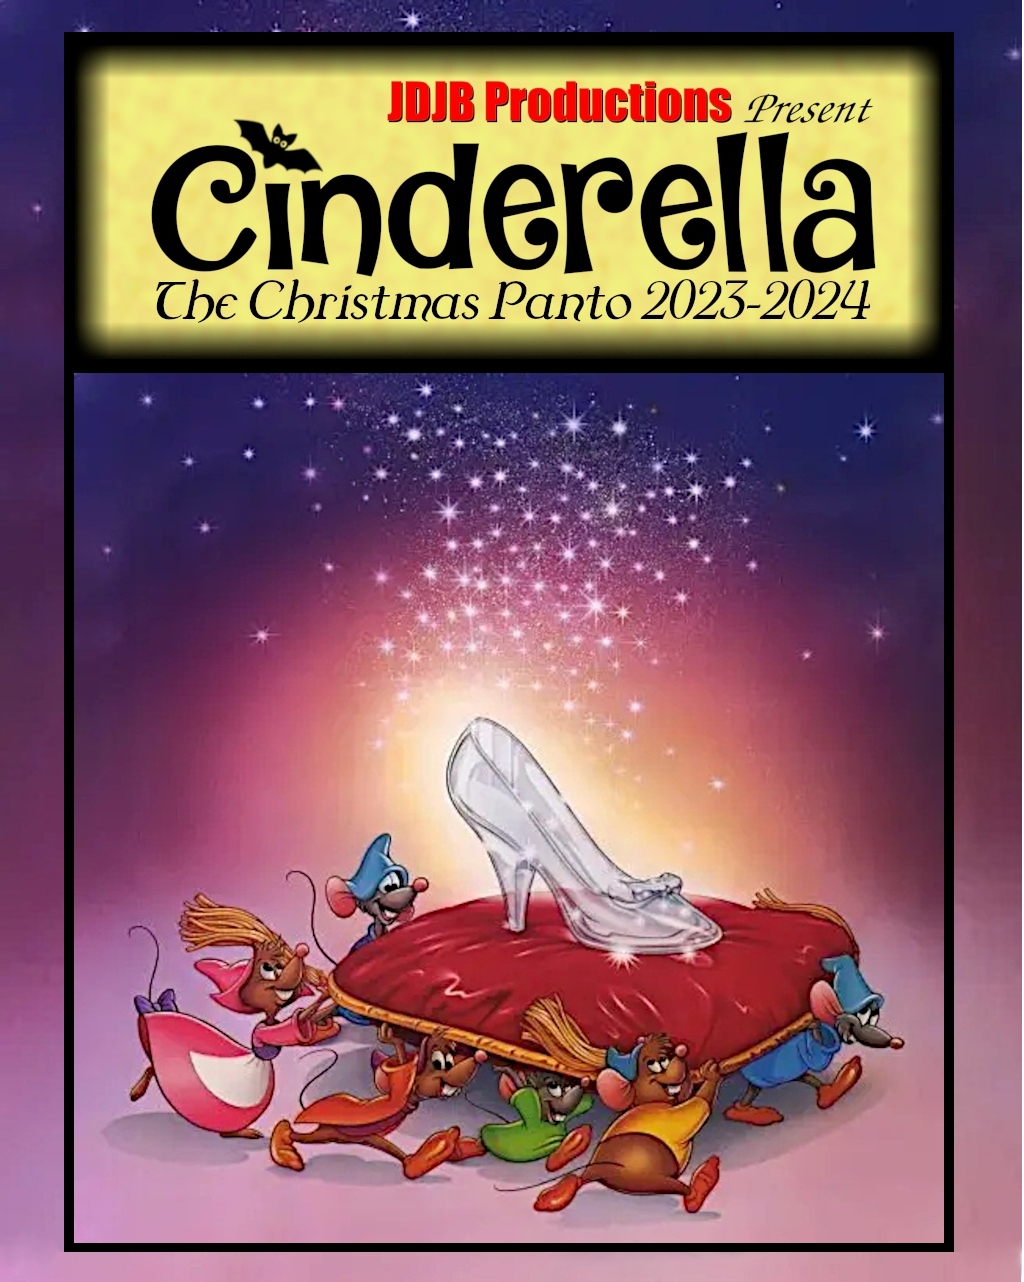 CinderellaPosterWeb